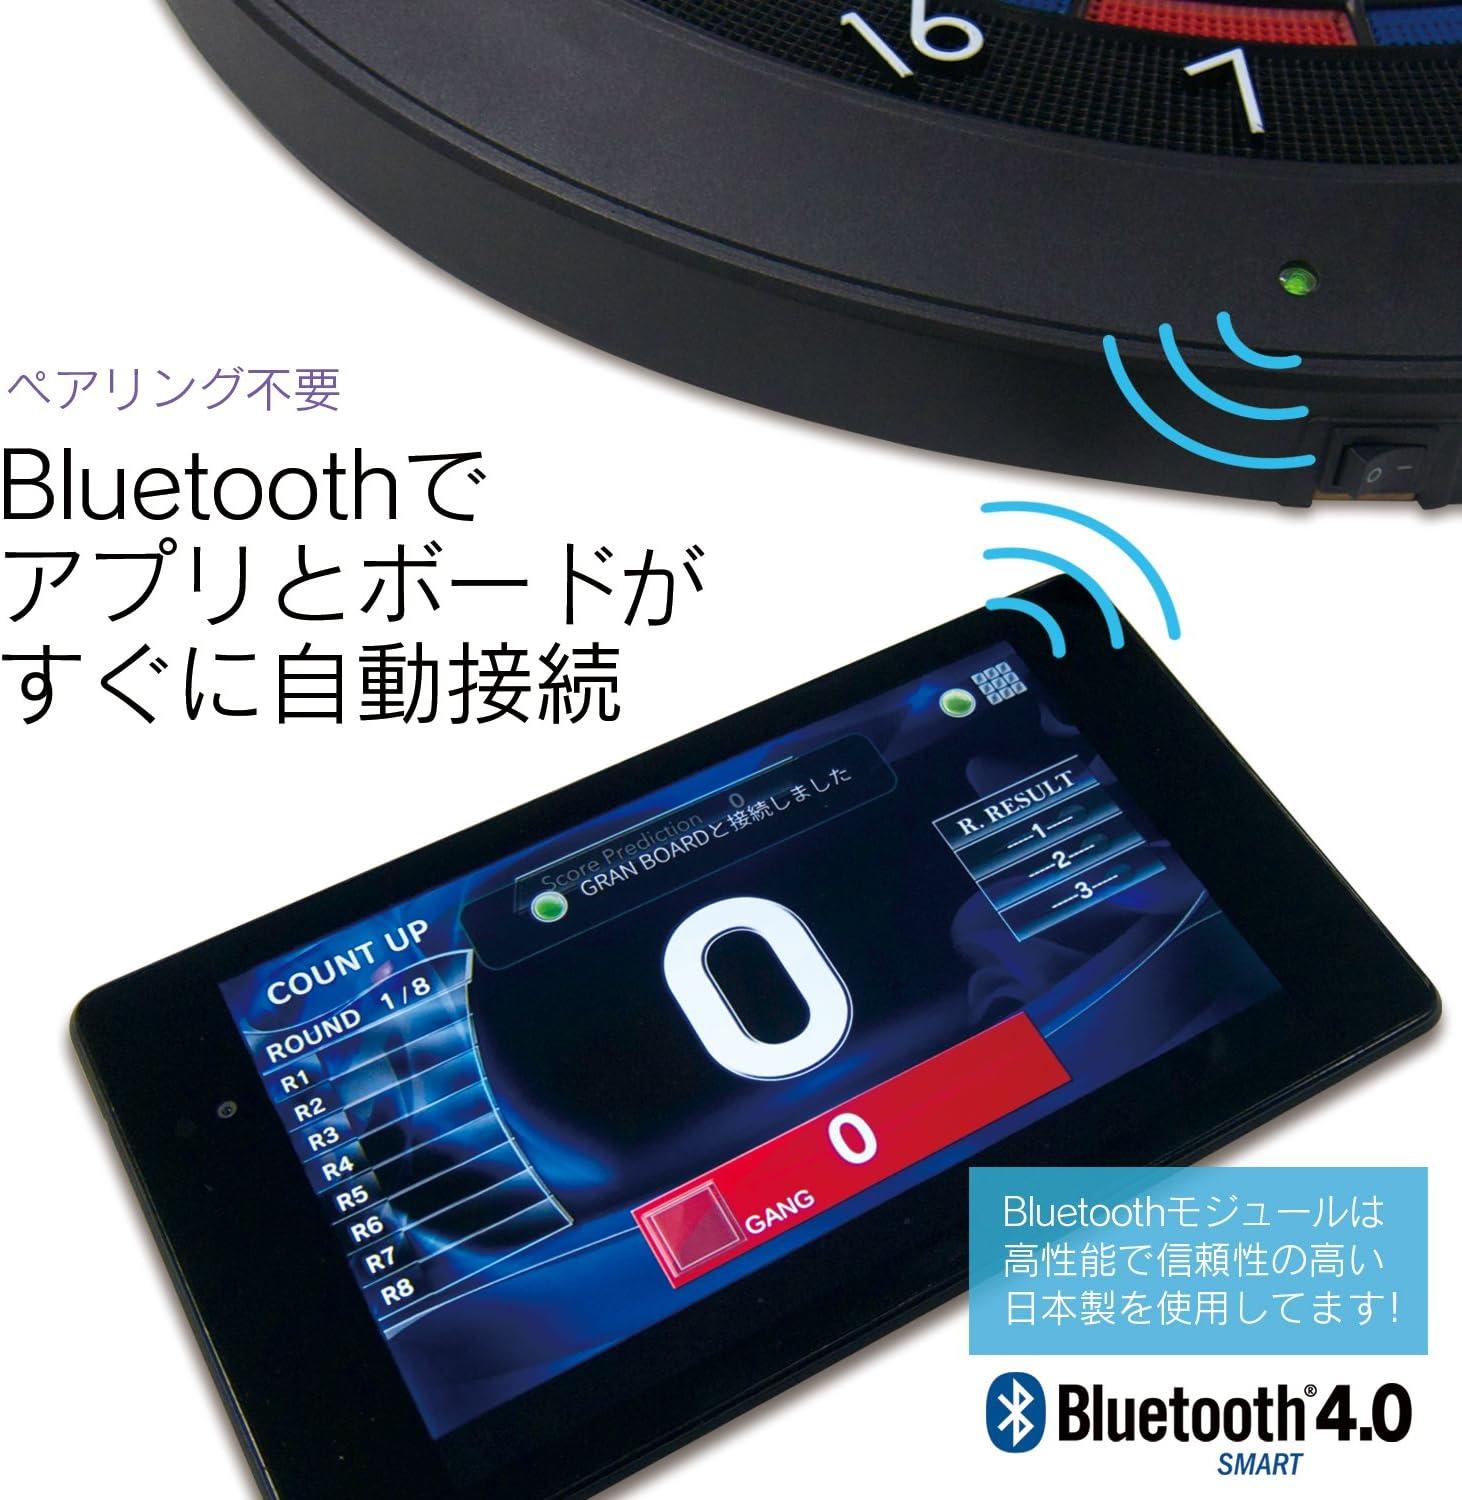 GRAN DARTS GRAN BOARD dash Dart board Green & Red Color Online Play  Bluetooth